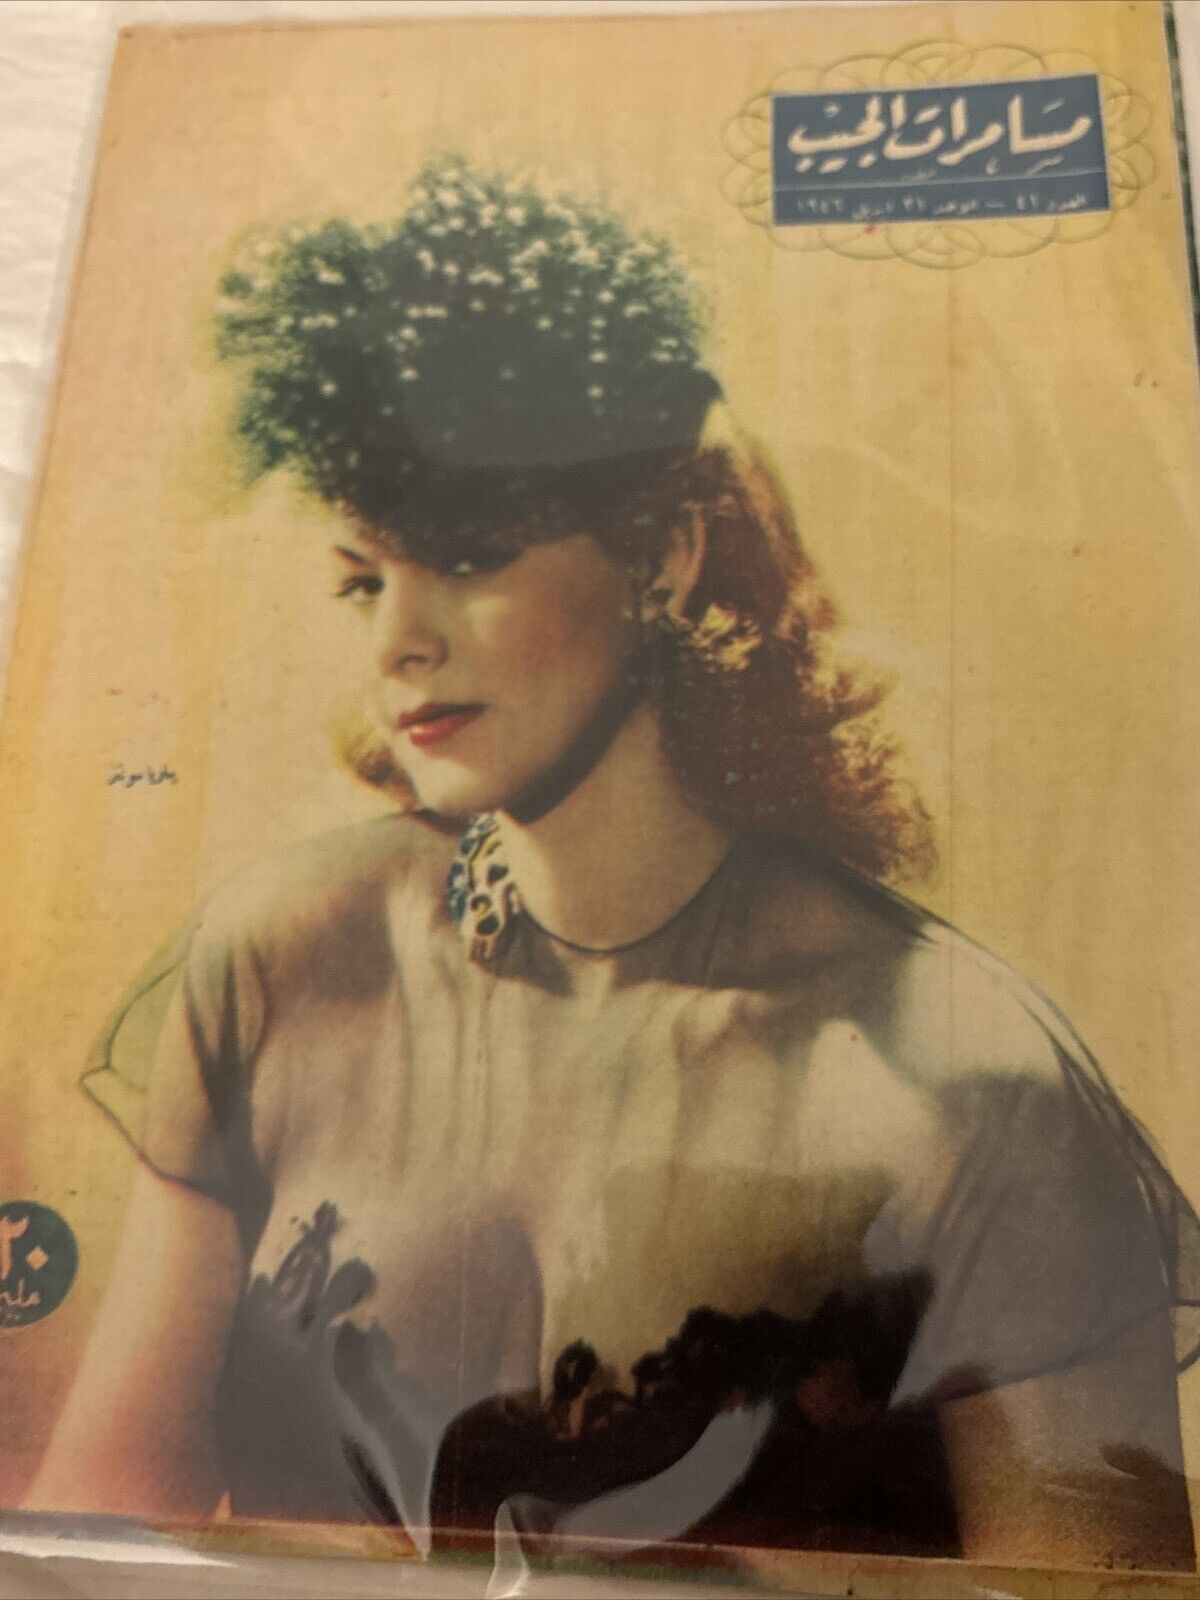 1946 Arabic Magazine Dominican Actress Maria Montez  Cover Scarce Hollywood